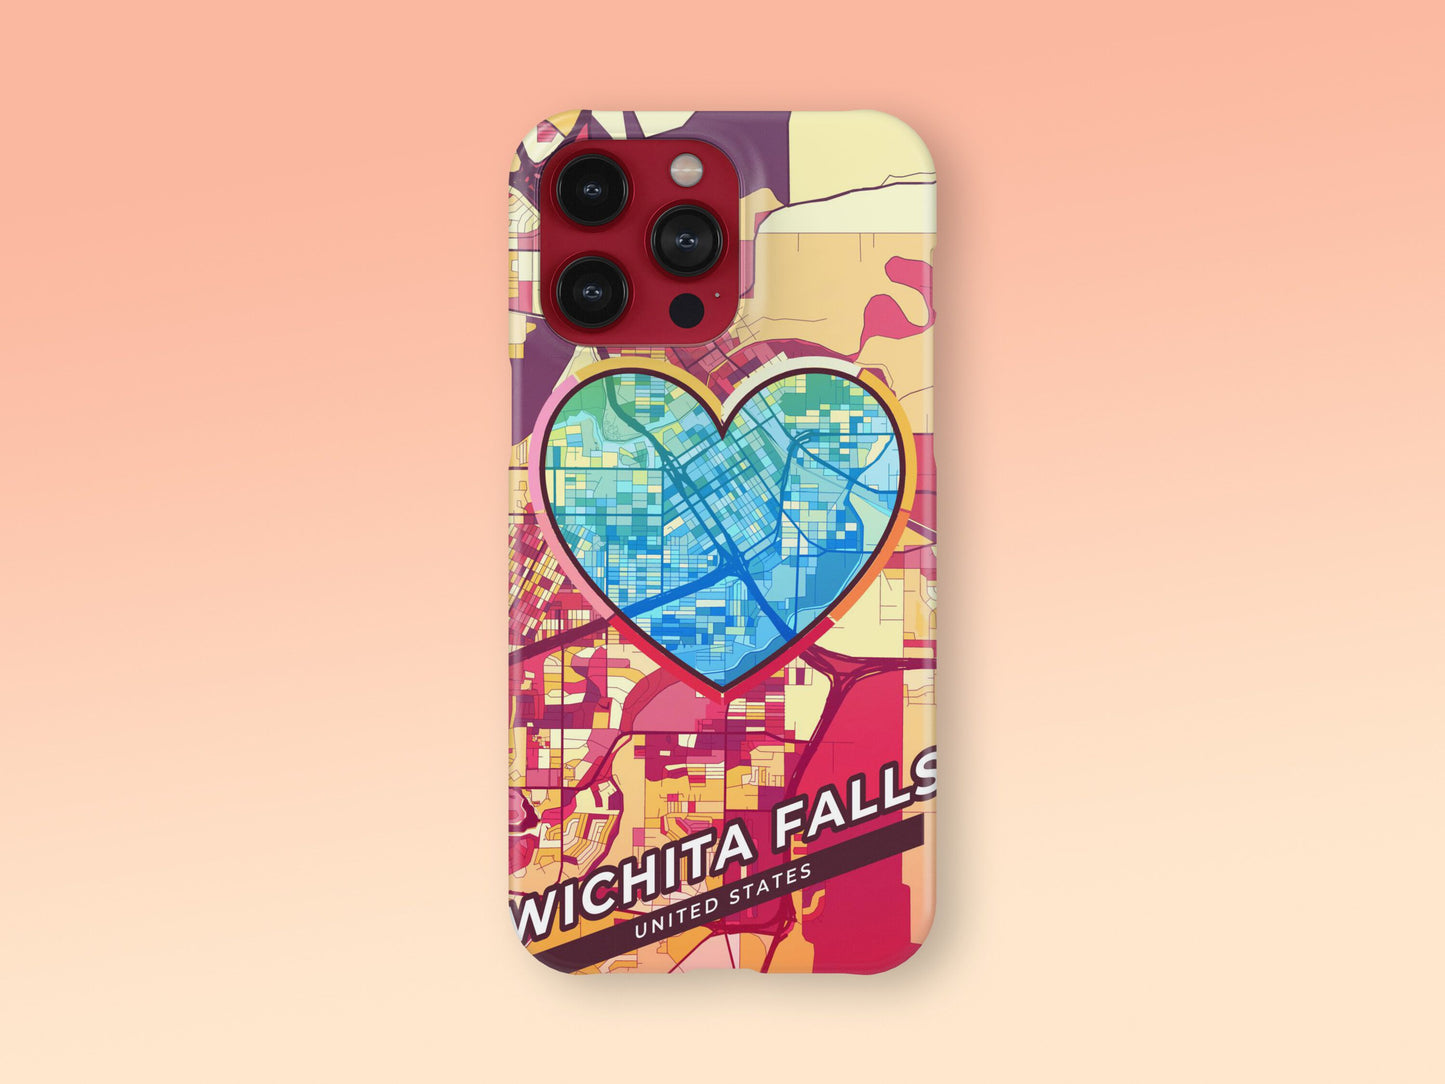 Wichita Falls Texas slim phone case with colorful icon 2